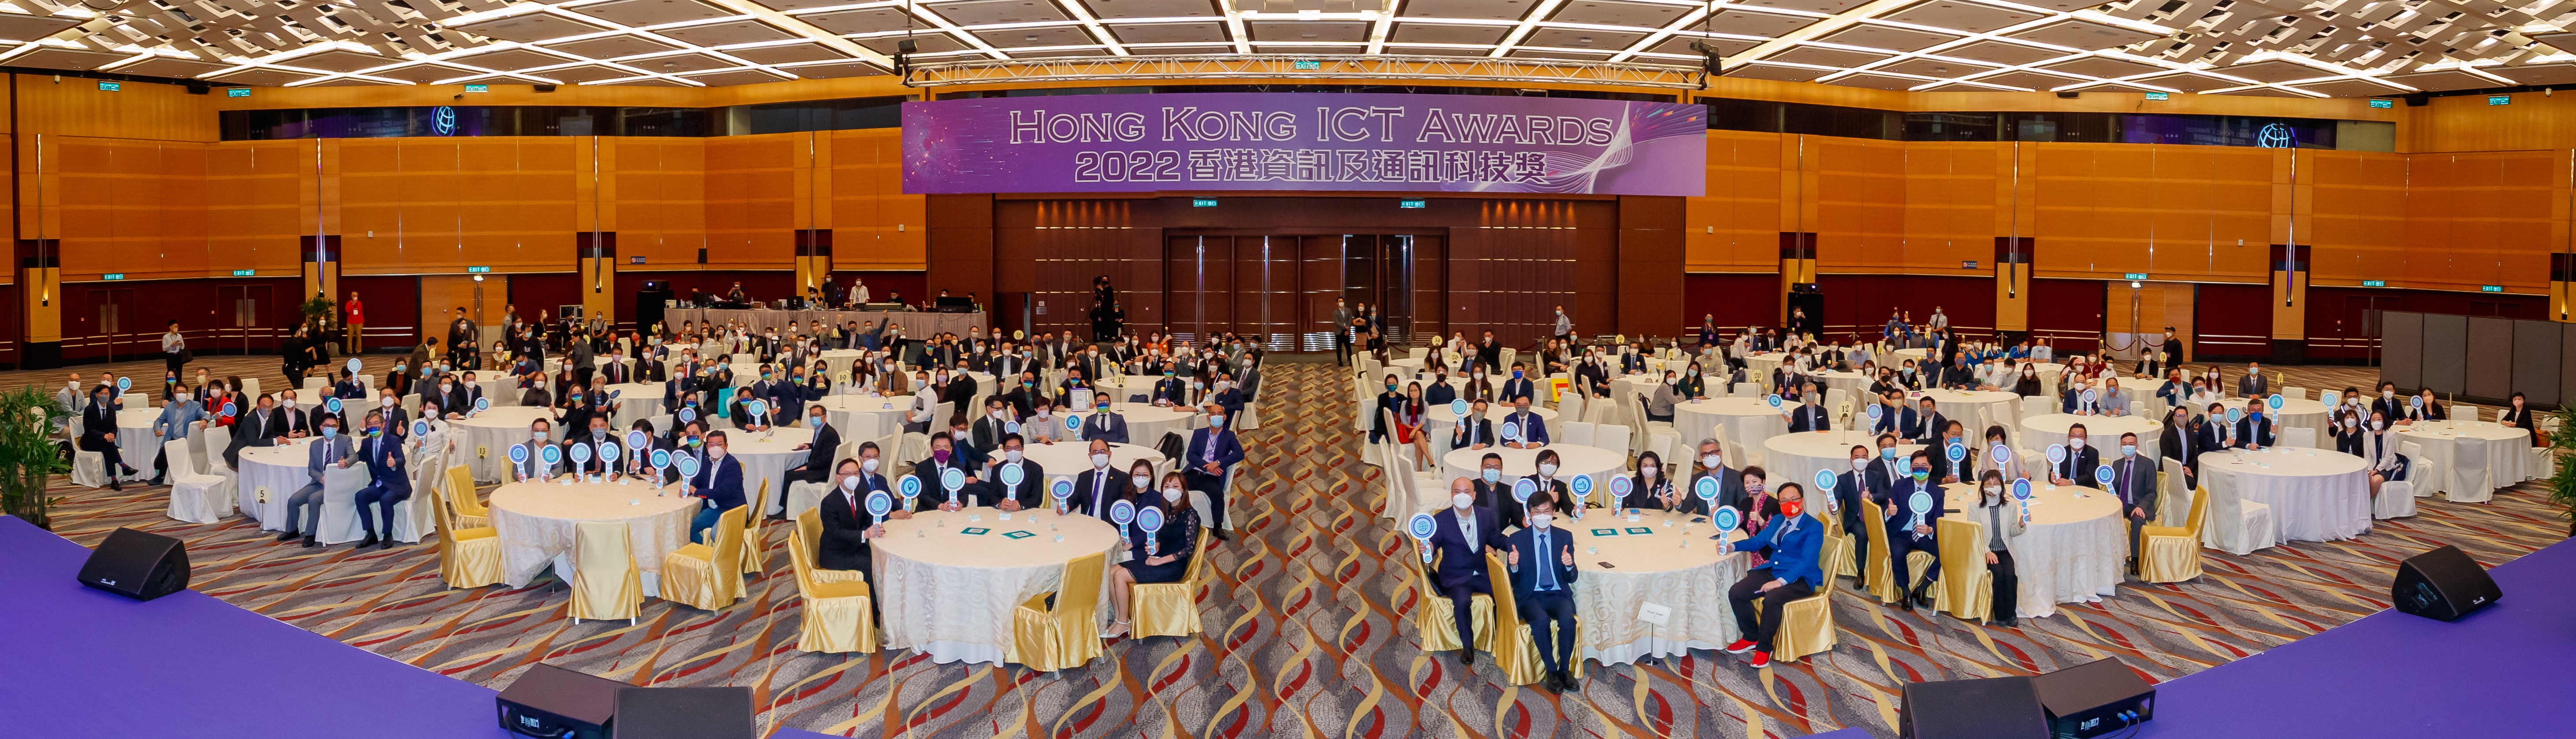 Hong Kong ICT Awards 2022 Awards Presentation Ceremony Big Group Photo